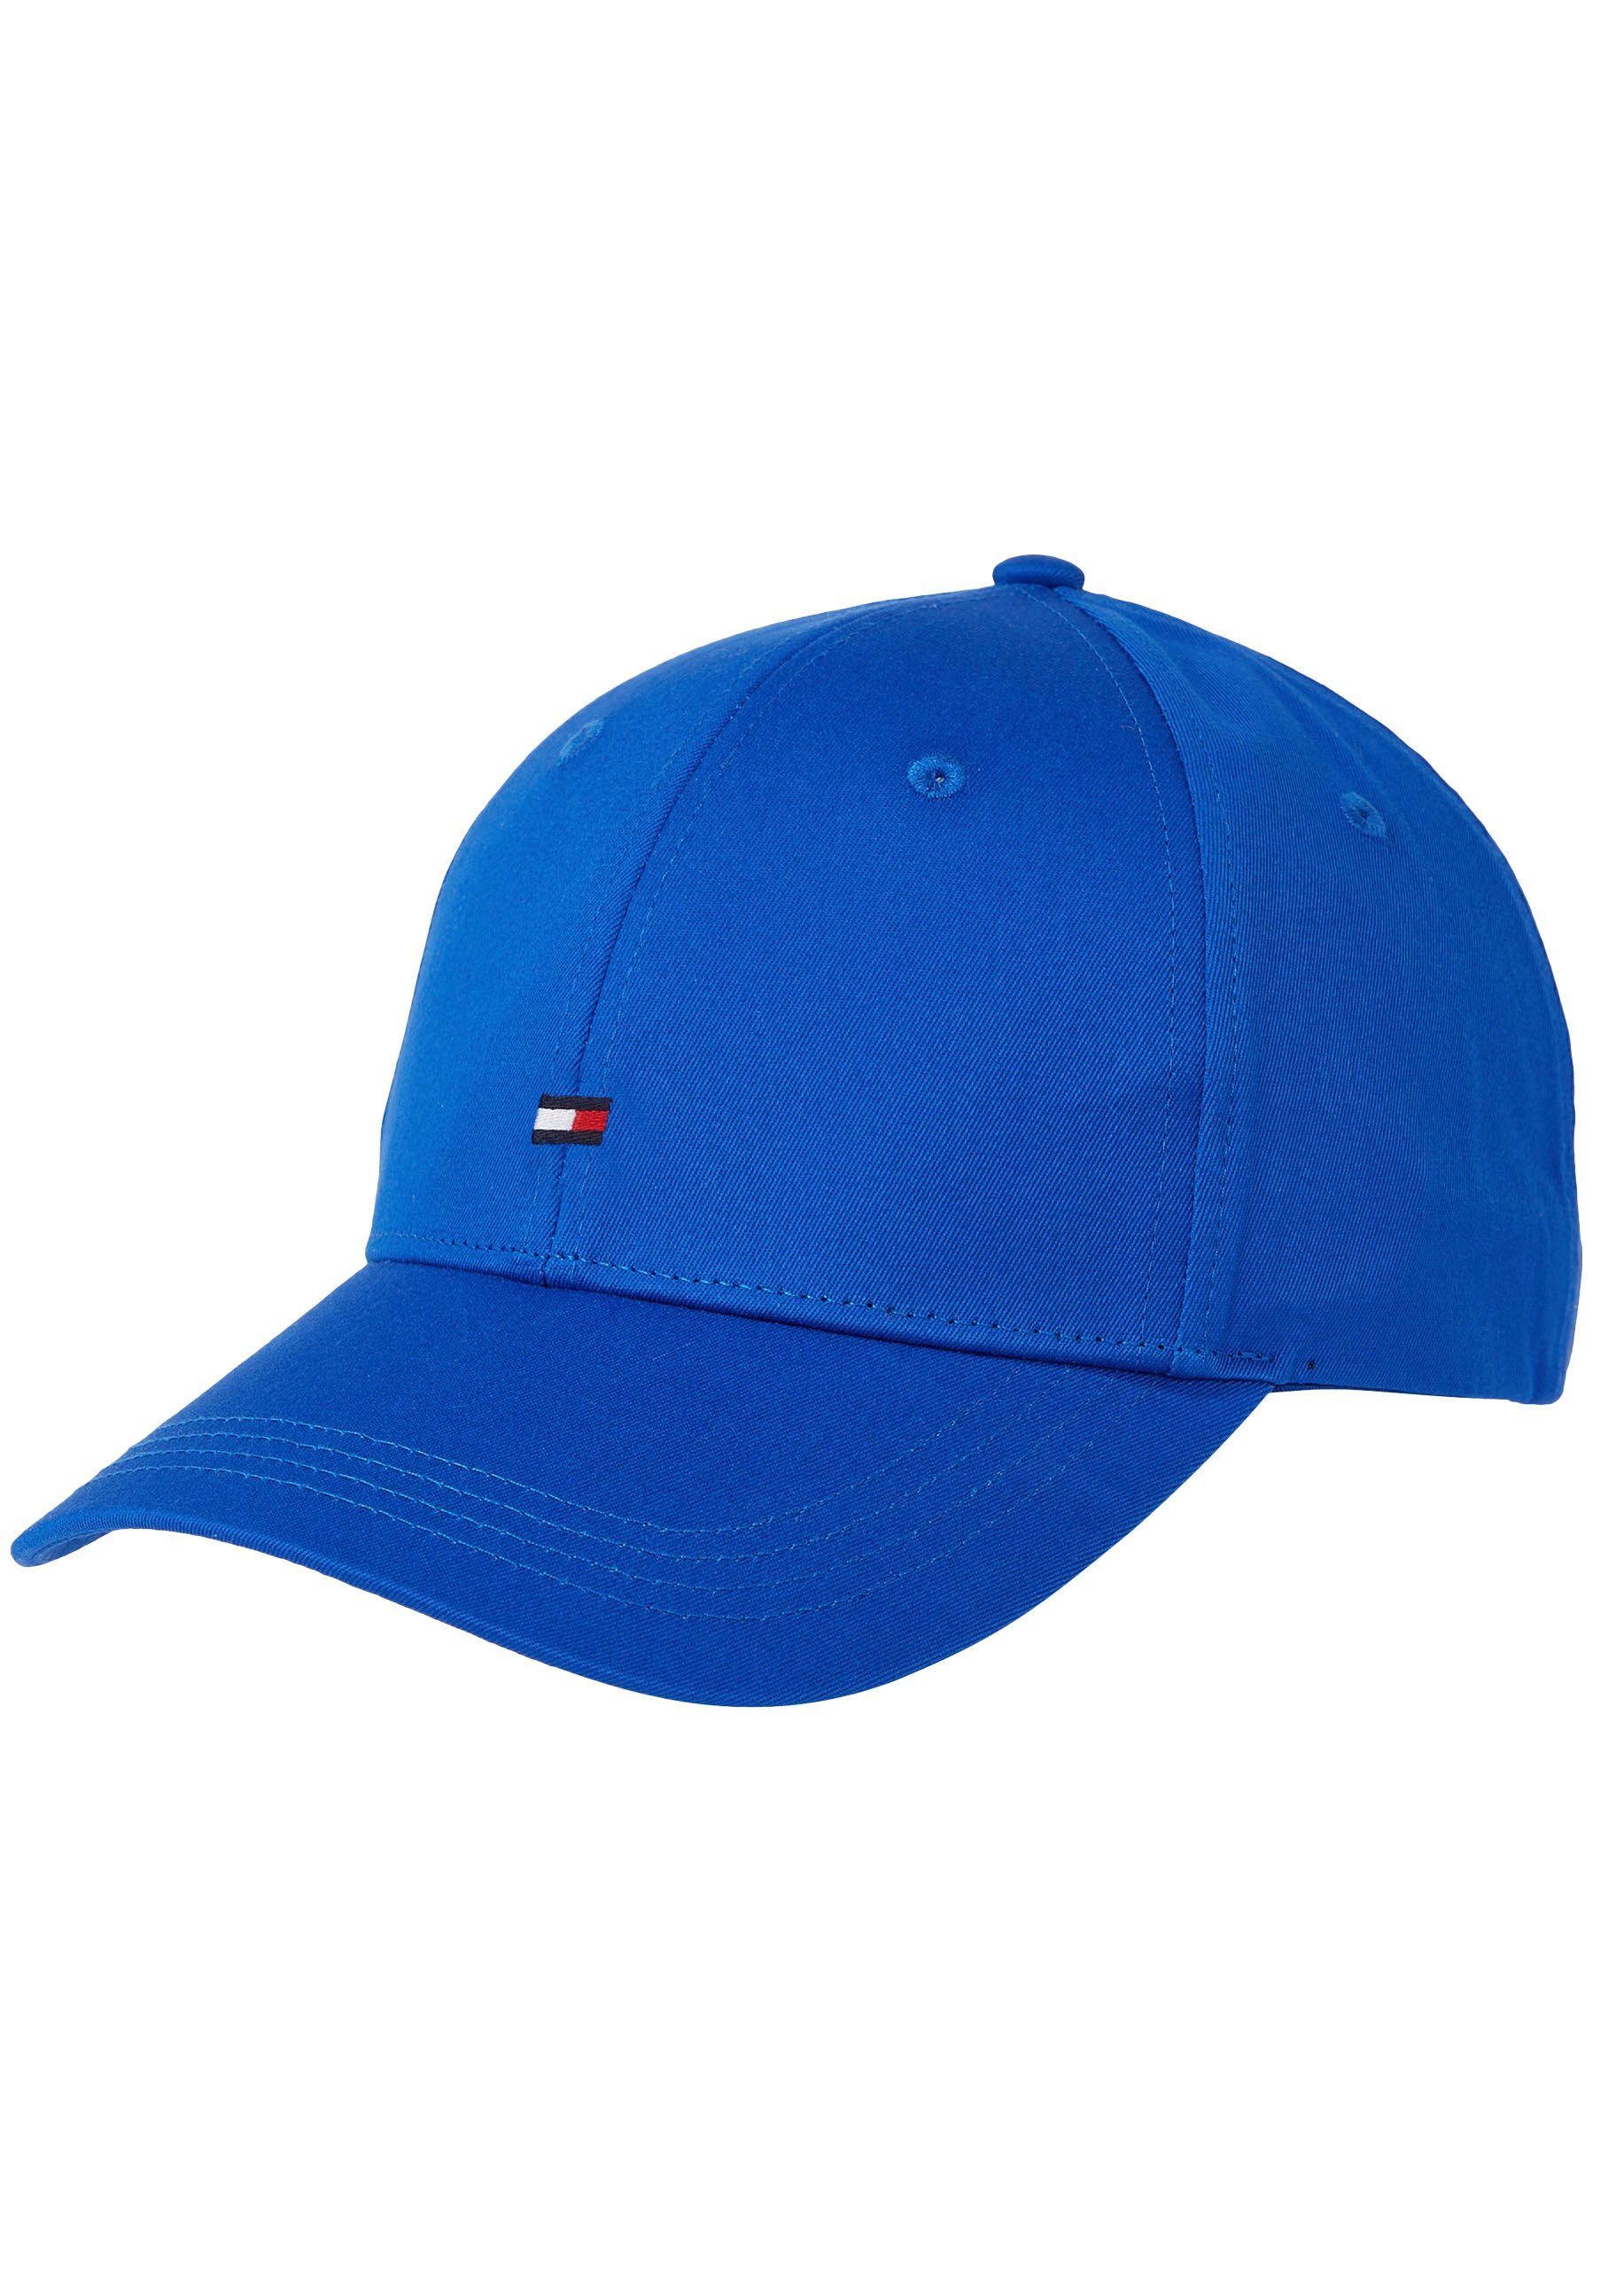 Tommy Hilfiger Baseball Cap FLAG Klemmverschluss CAP mit Blue Flag-Gravur auf Ultra Tommy